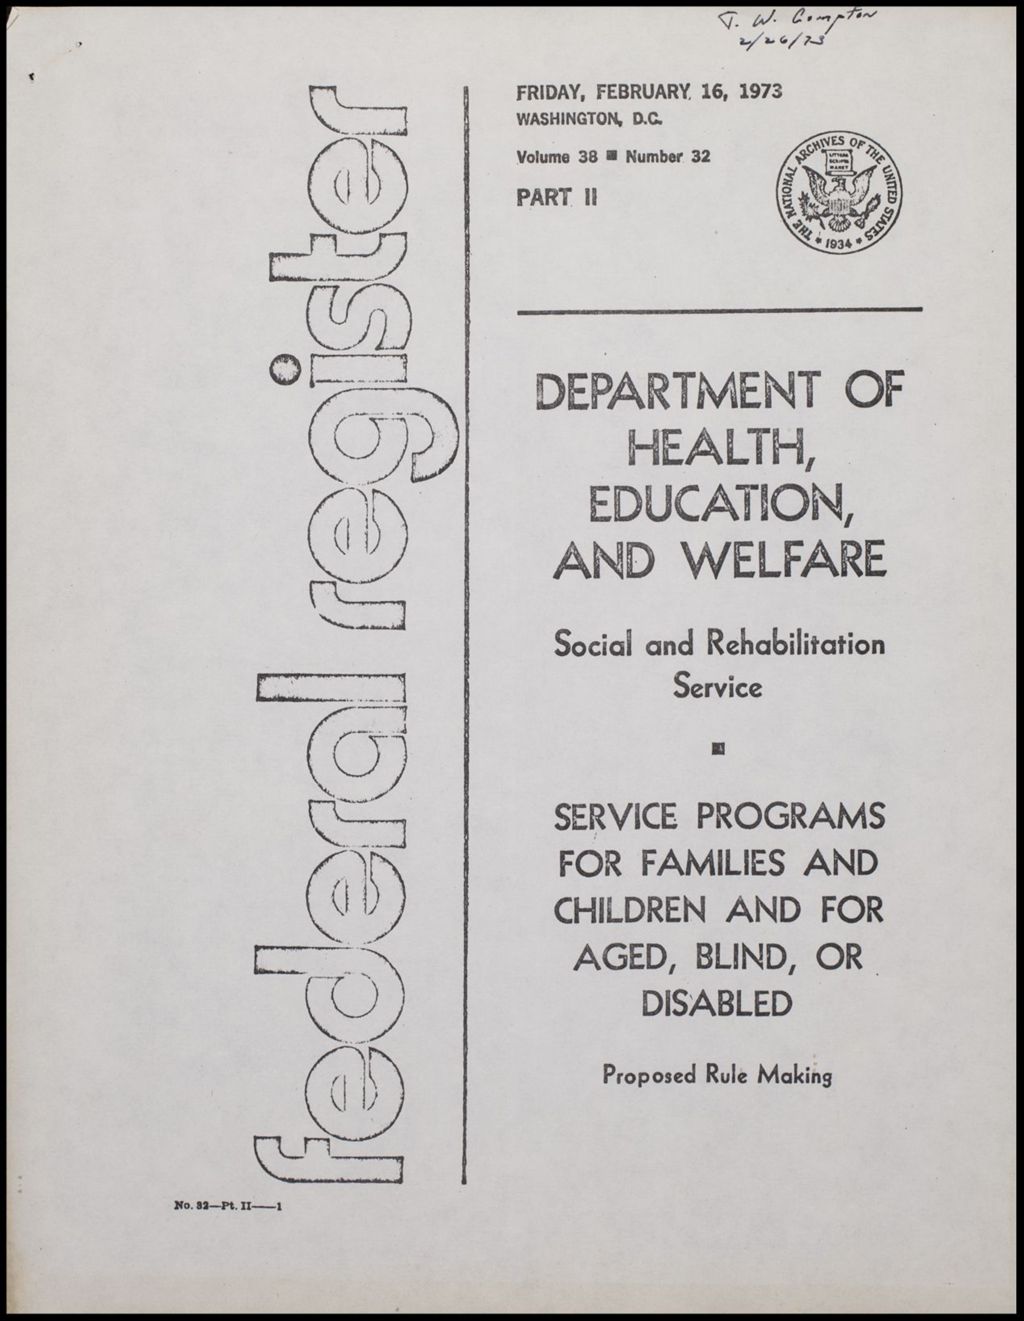 Citizens Health Organizations, 1972 (Folder III-191)